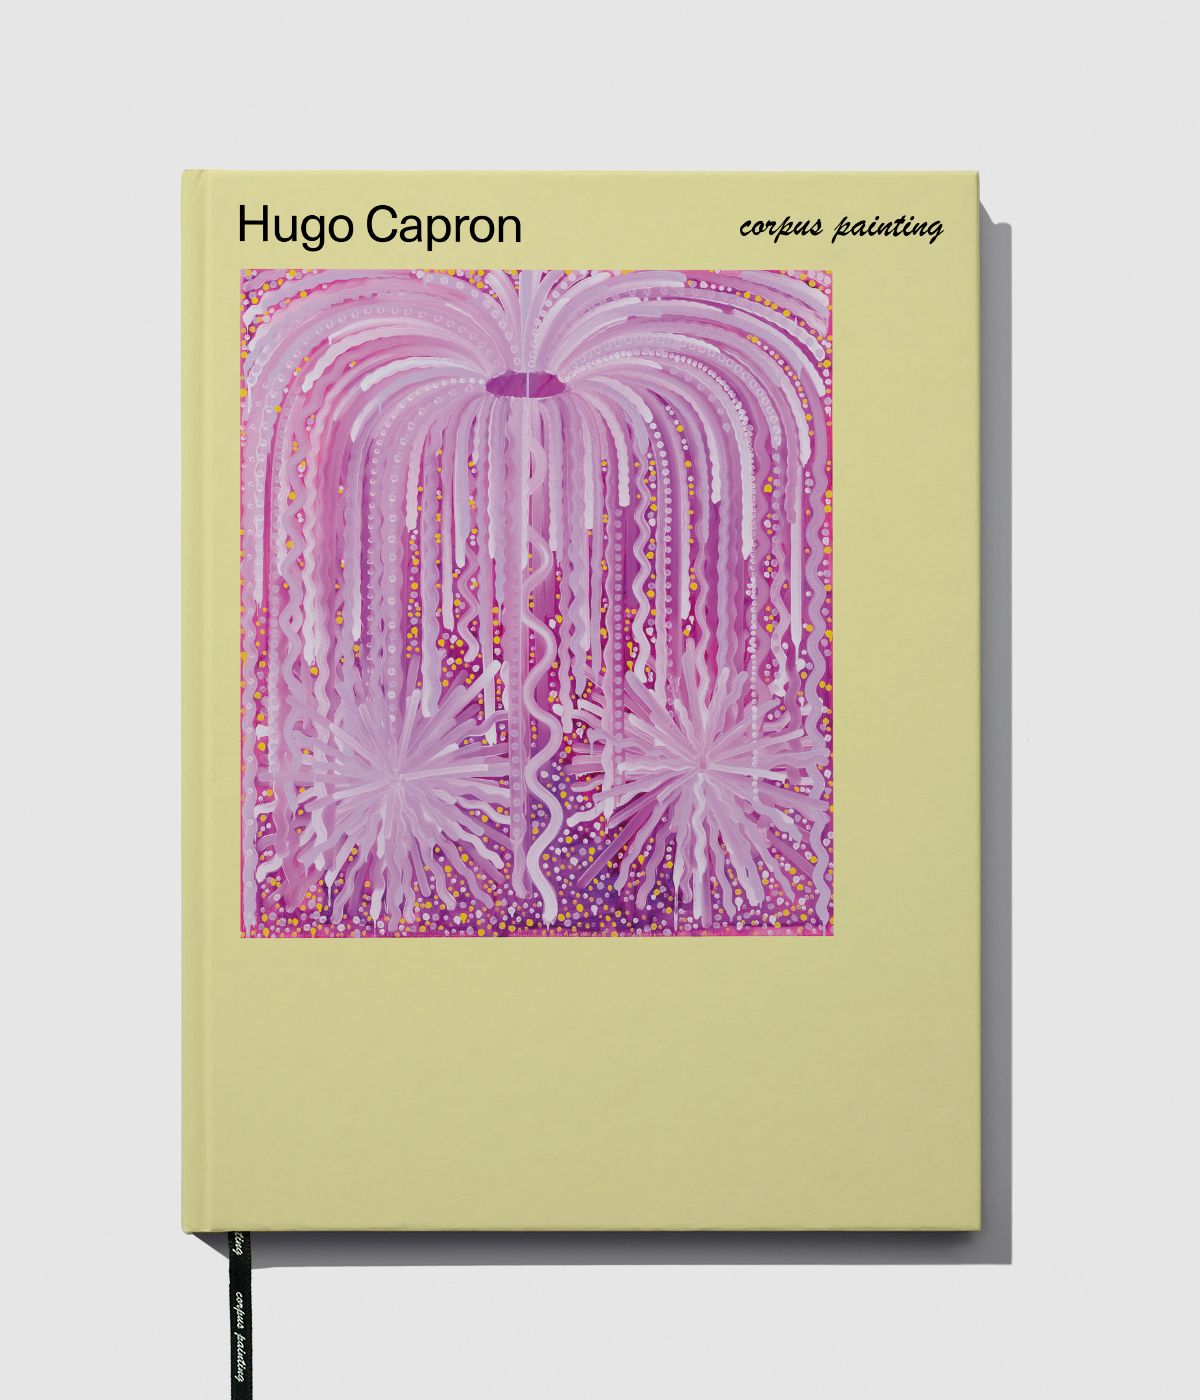 Hugo Capron